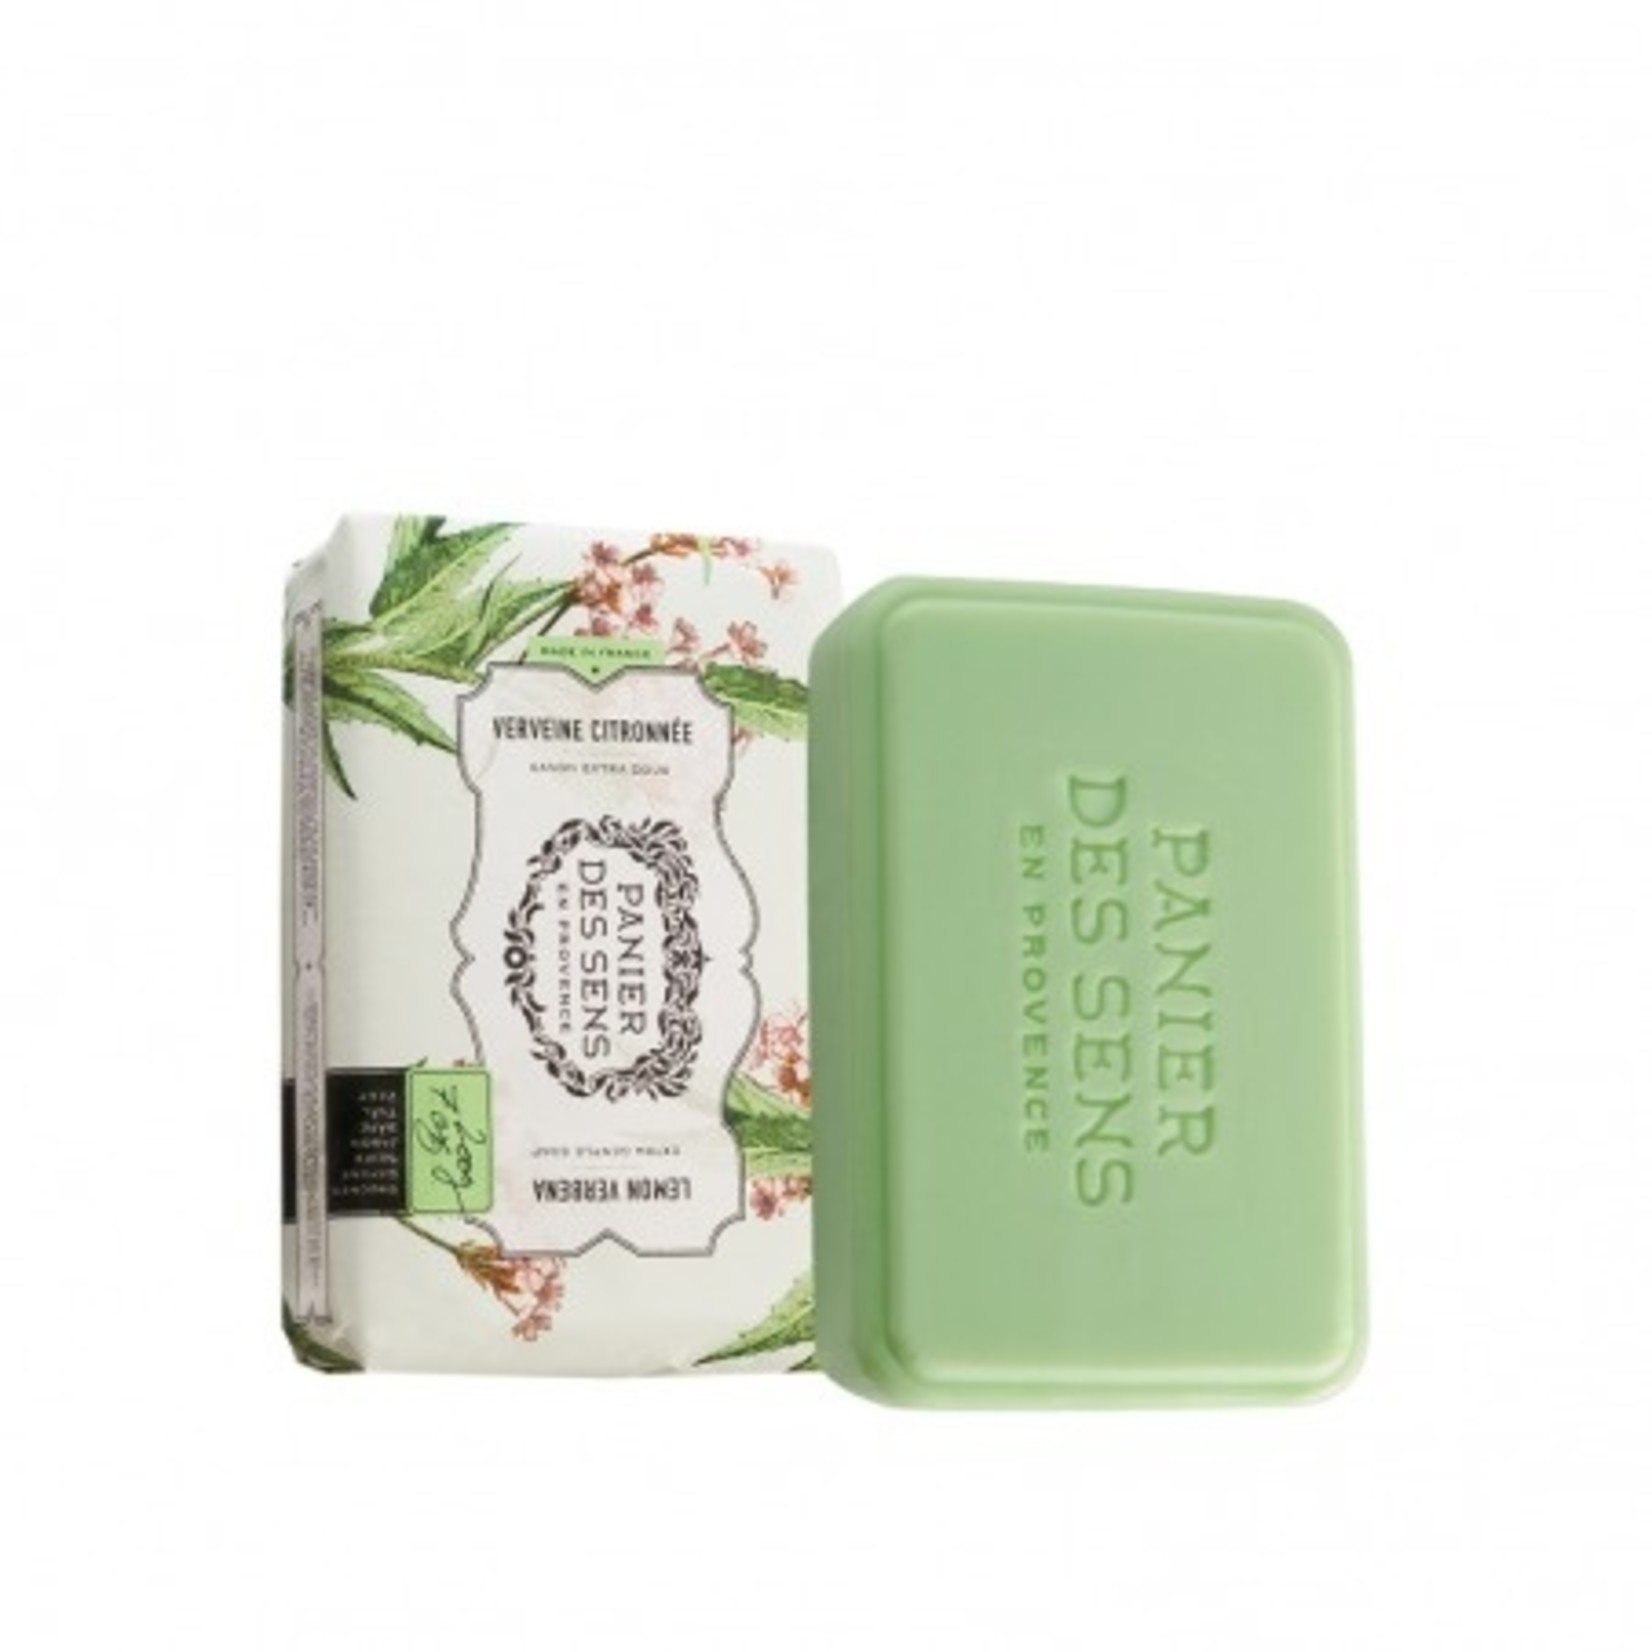 Panier des Sens Extra Gentle Soap (Sheabutter)  - Lemon Verbana